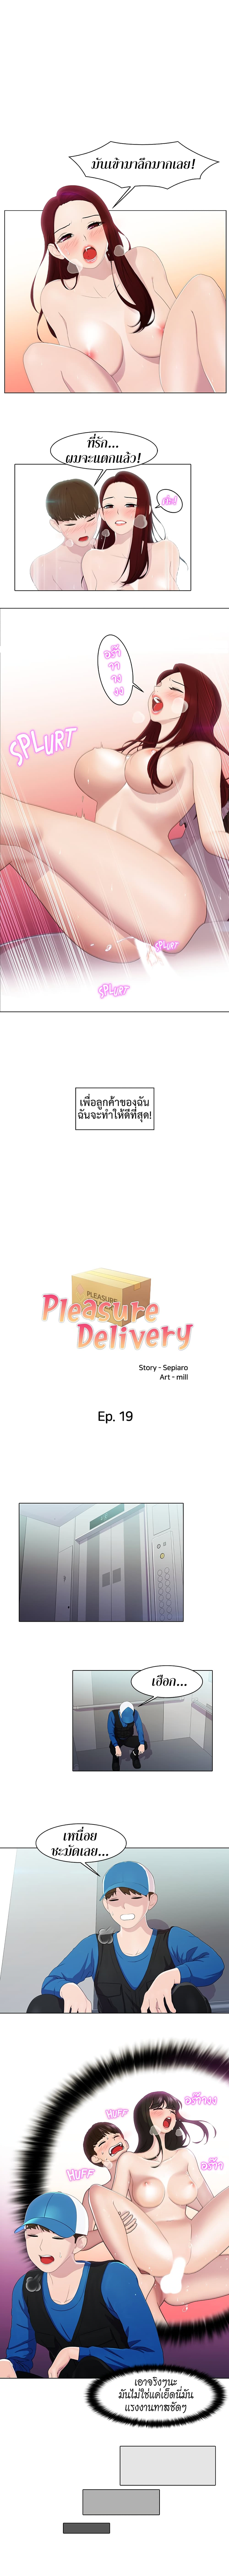 Pleasure Delivery 19 (2)